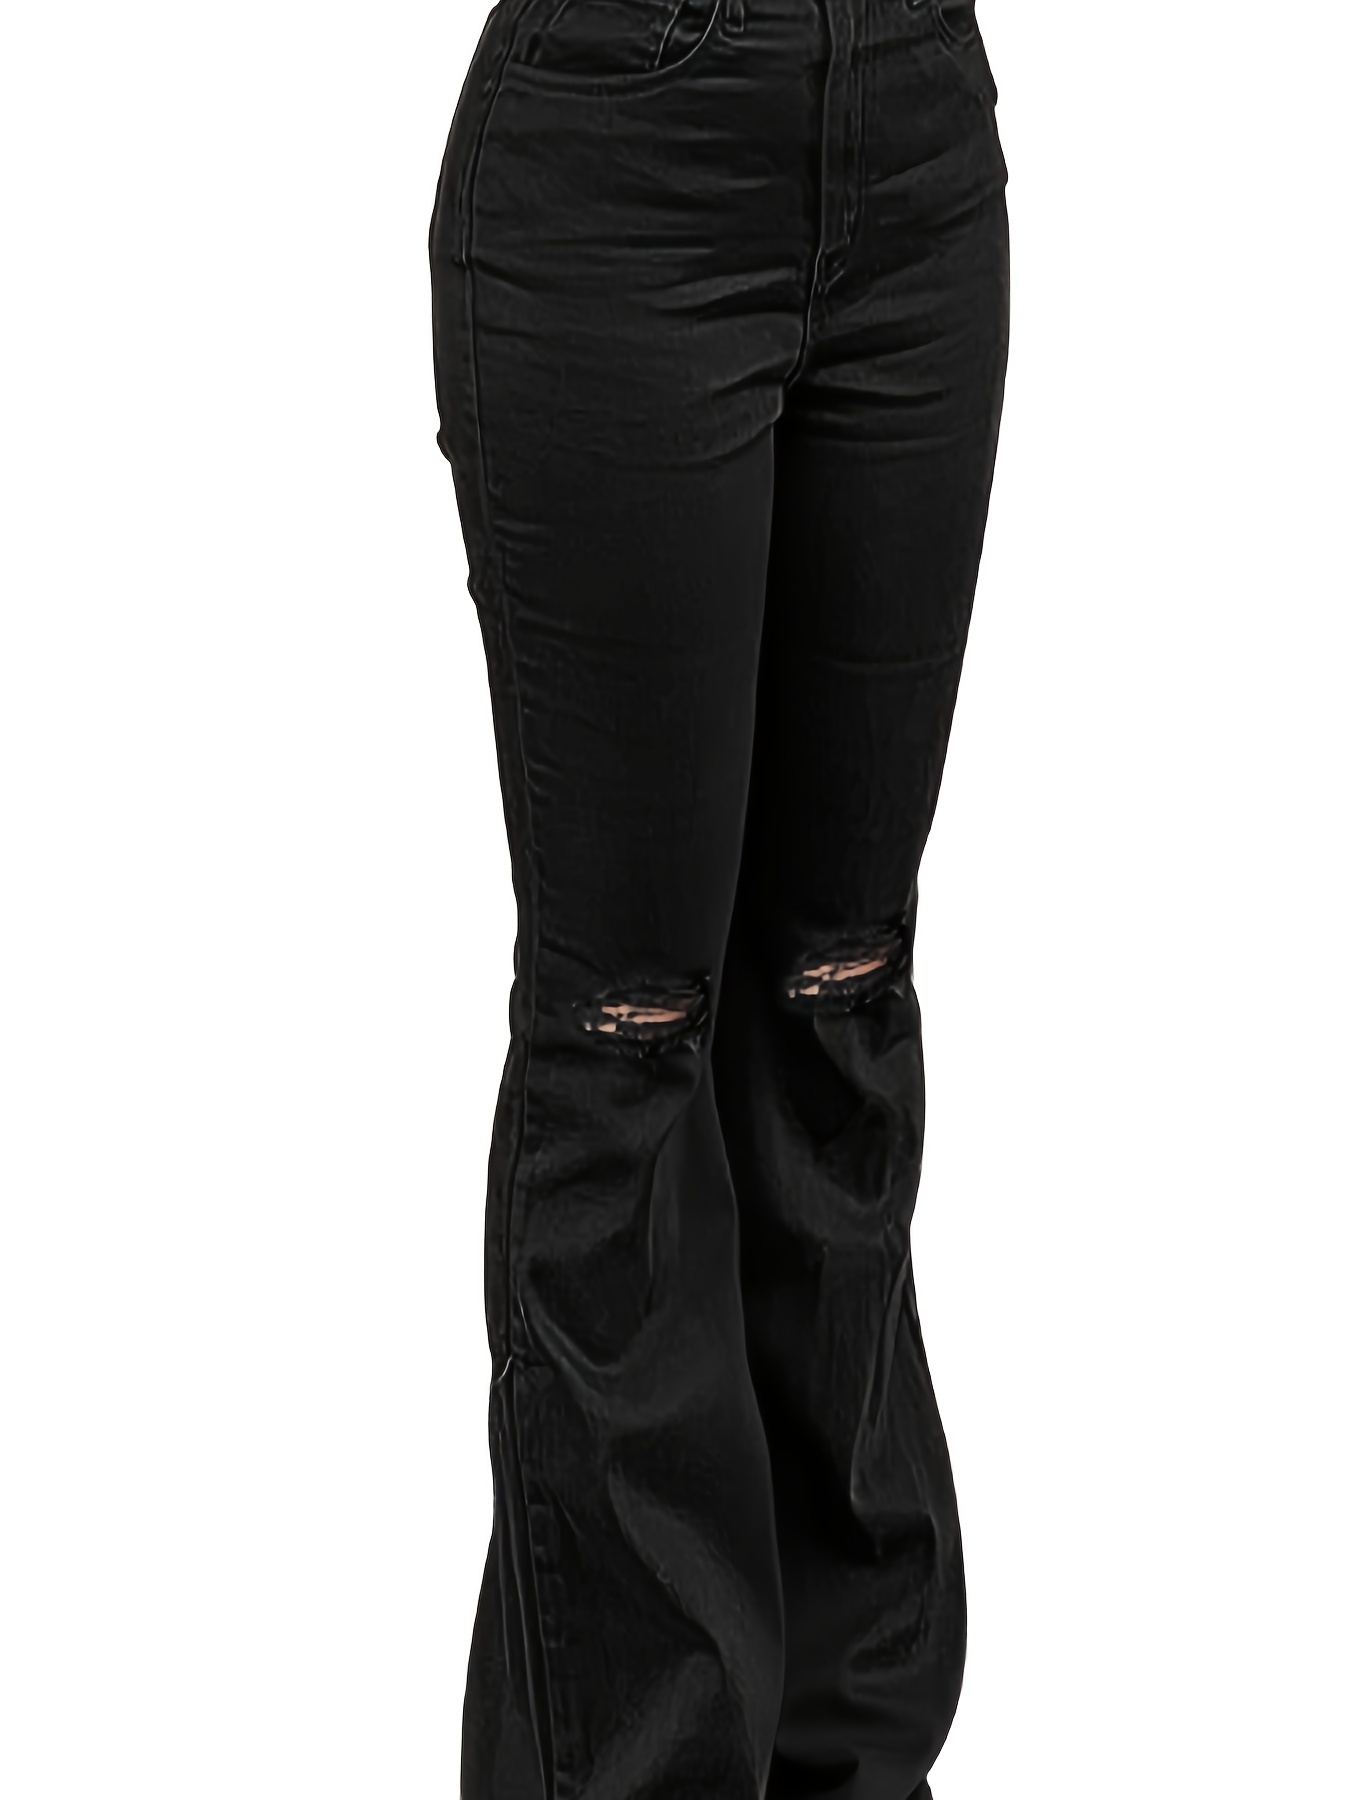 KaLI_store Jeans for Women Women Mid Rise Distressed Flare Wide Leg Jeans  Ripped Hole Denim Pants Black,L 